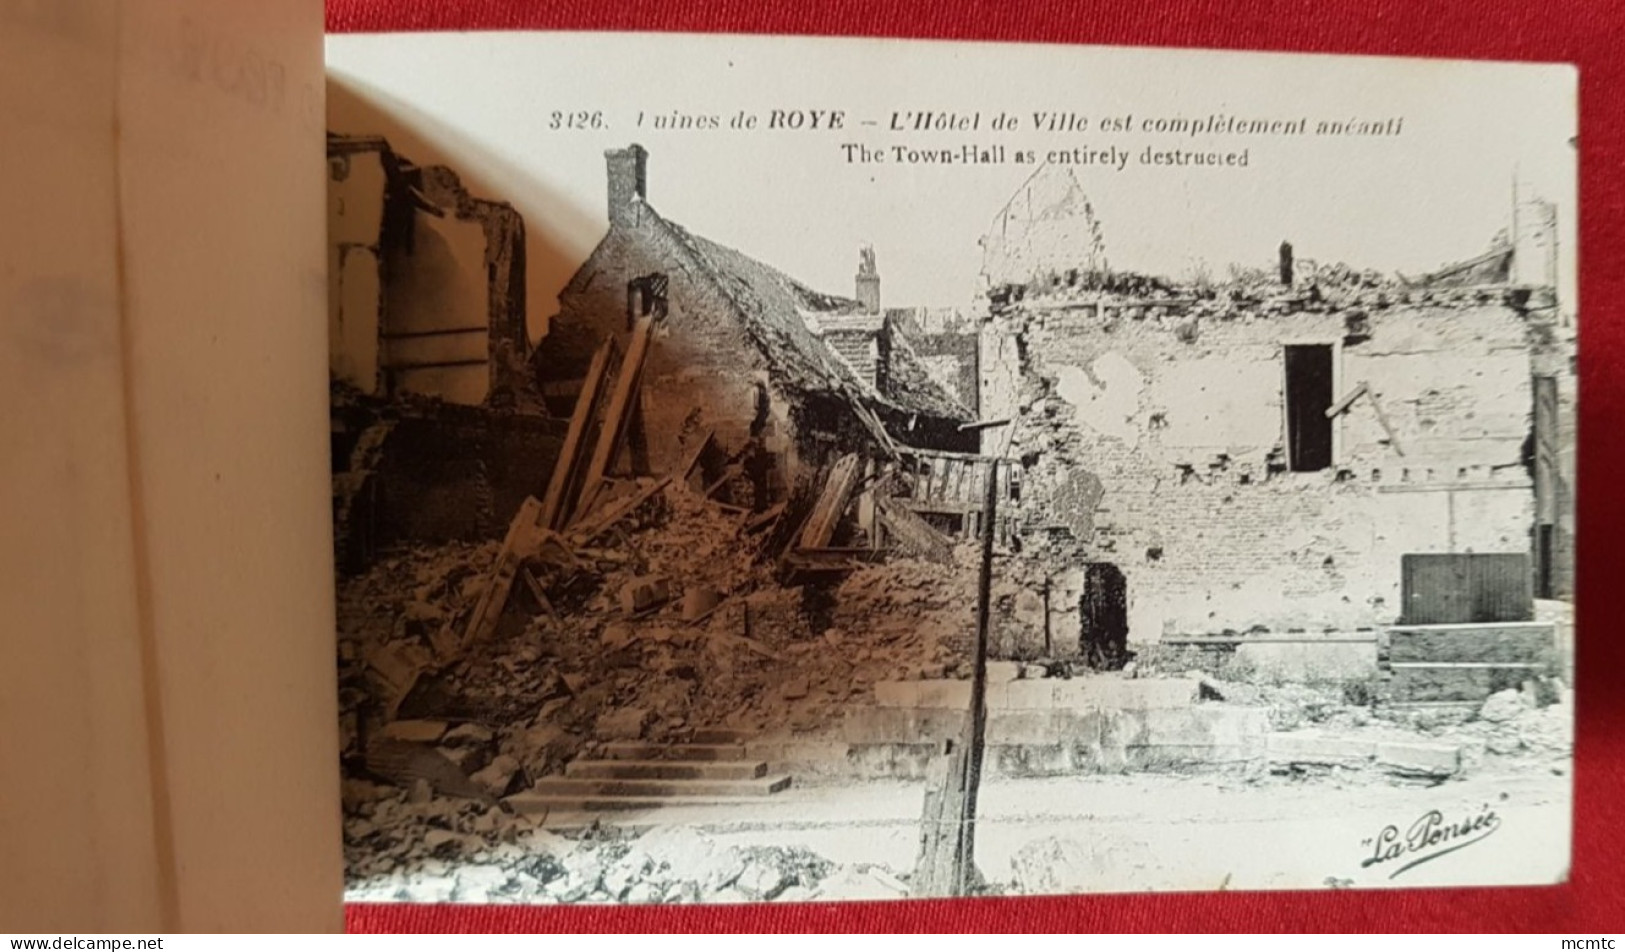 Carnet incomplet, reste 9 cartes - Roye en Ruines - Album Souvenir